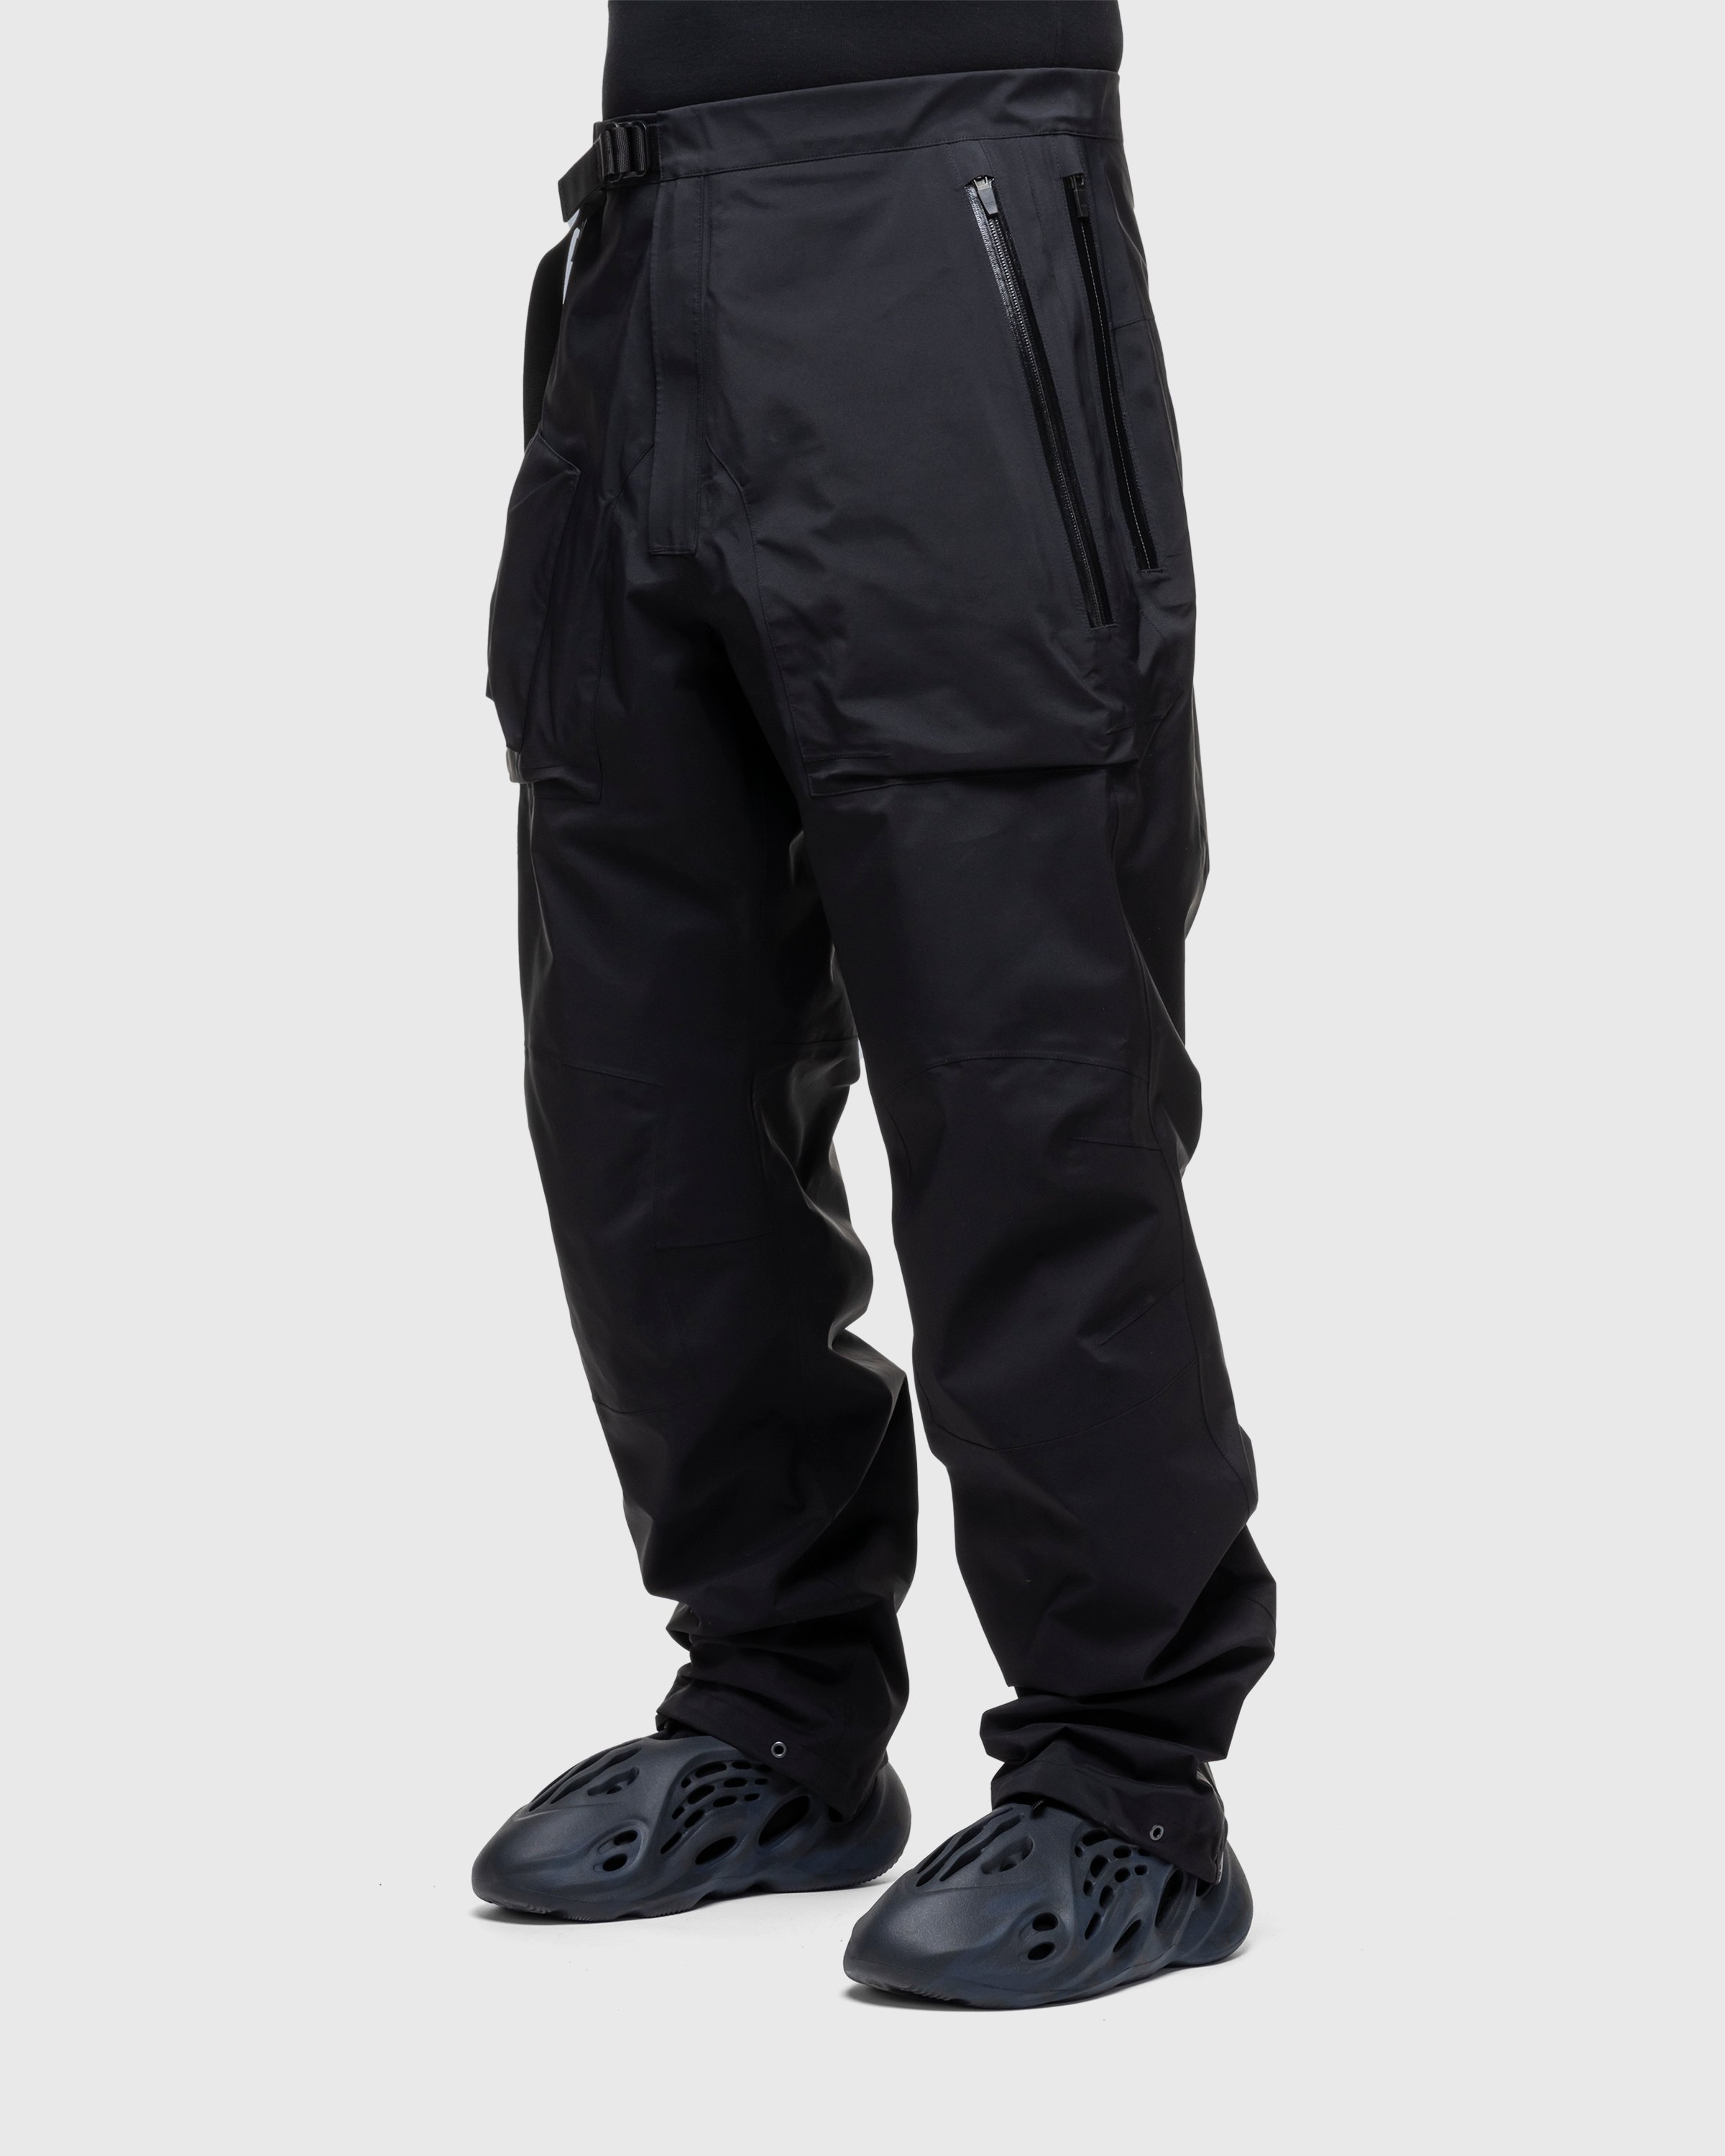 ACRONYM - P43-GT Pant Black - Clothing - Black - Image 5